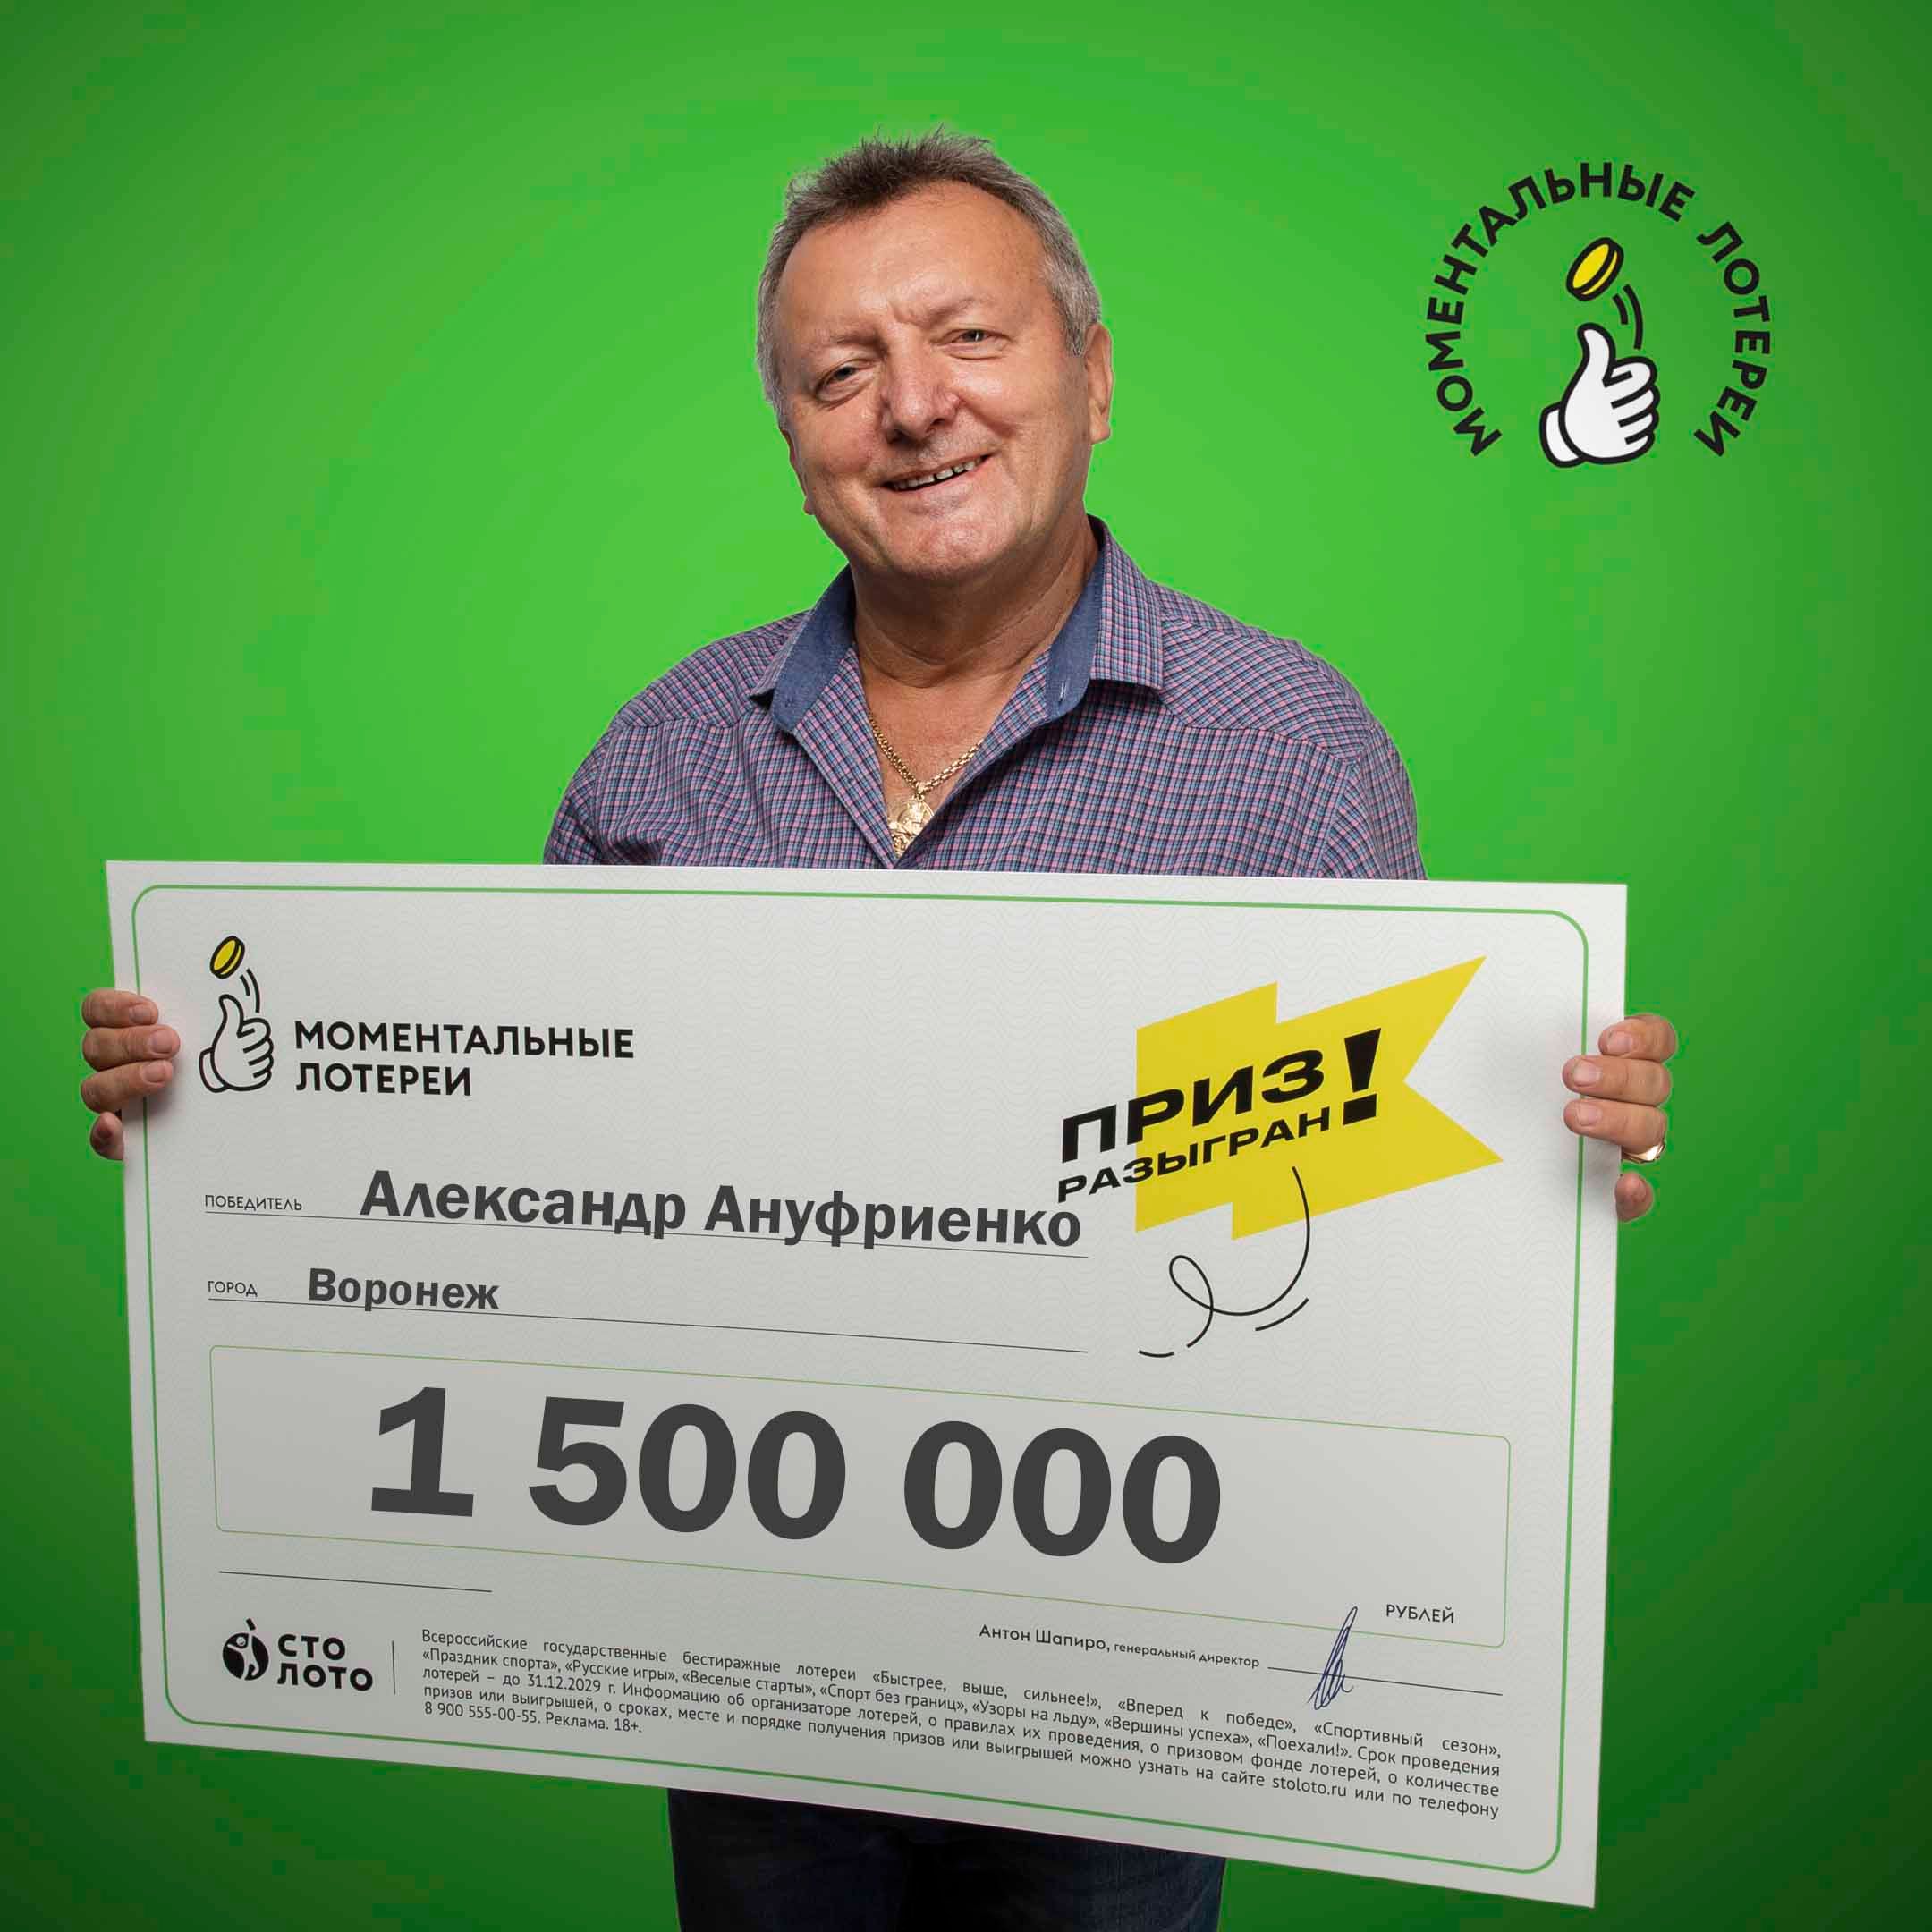 Александр Ануфриенко